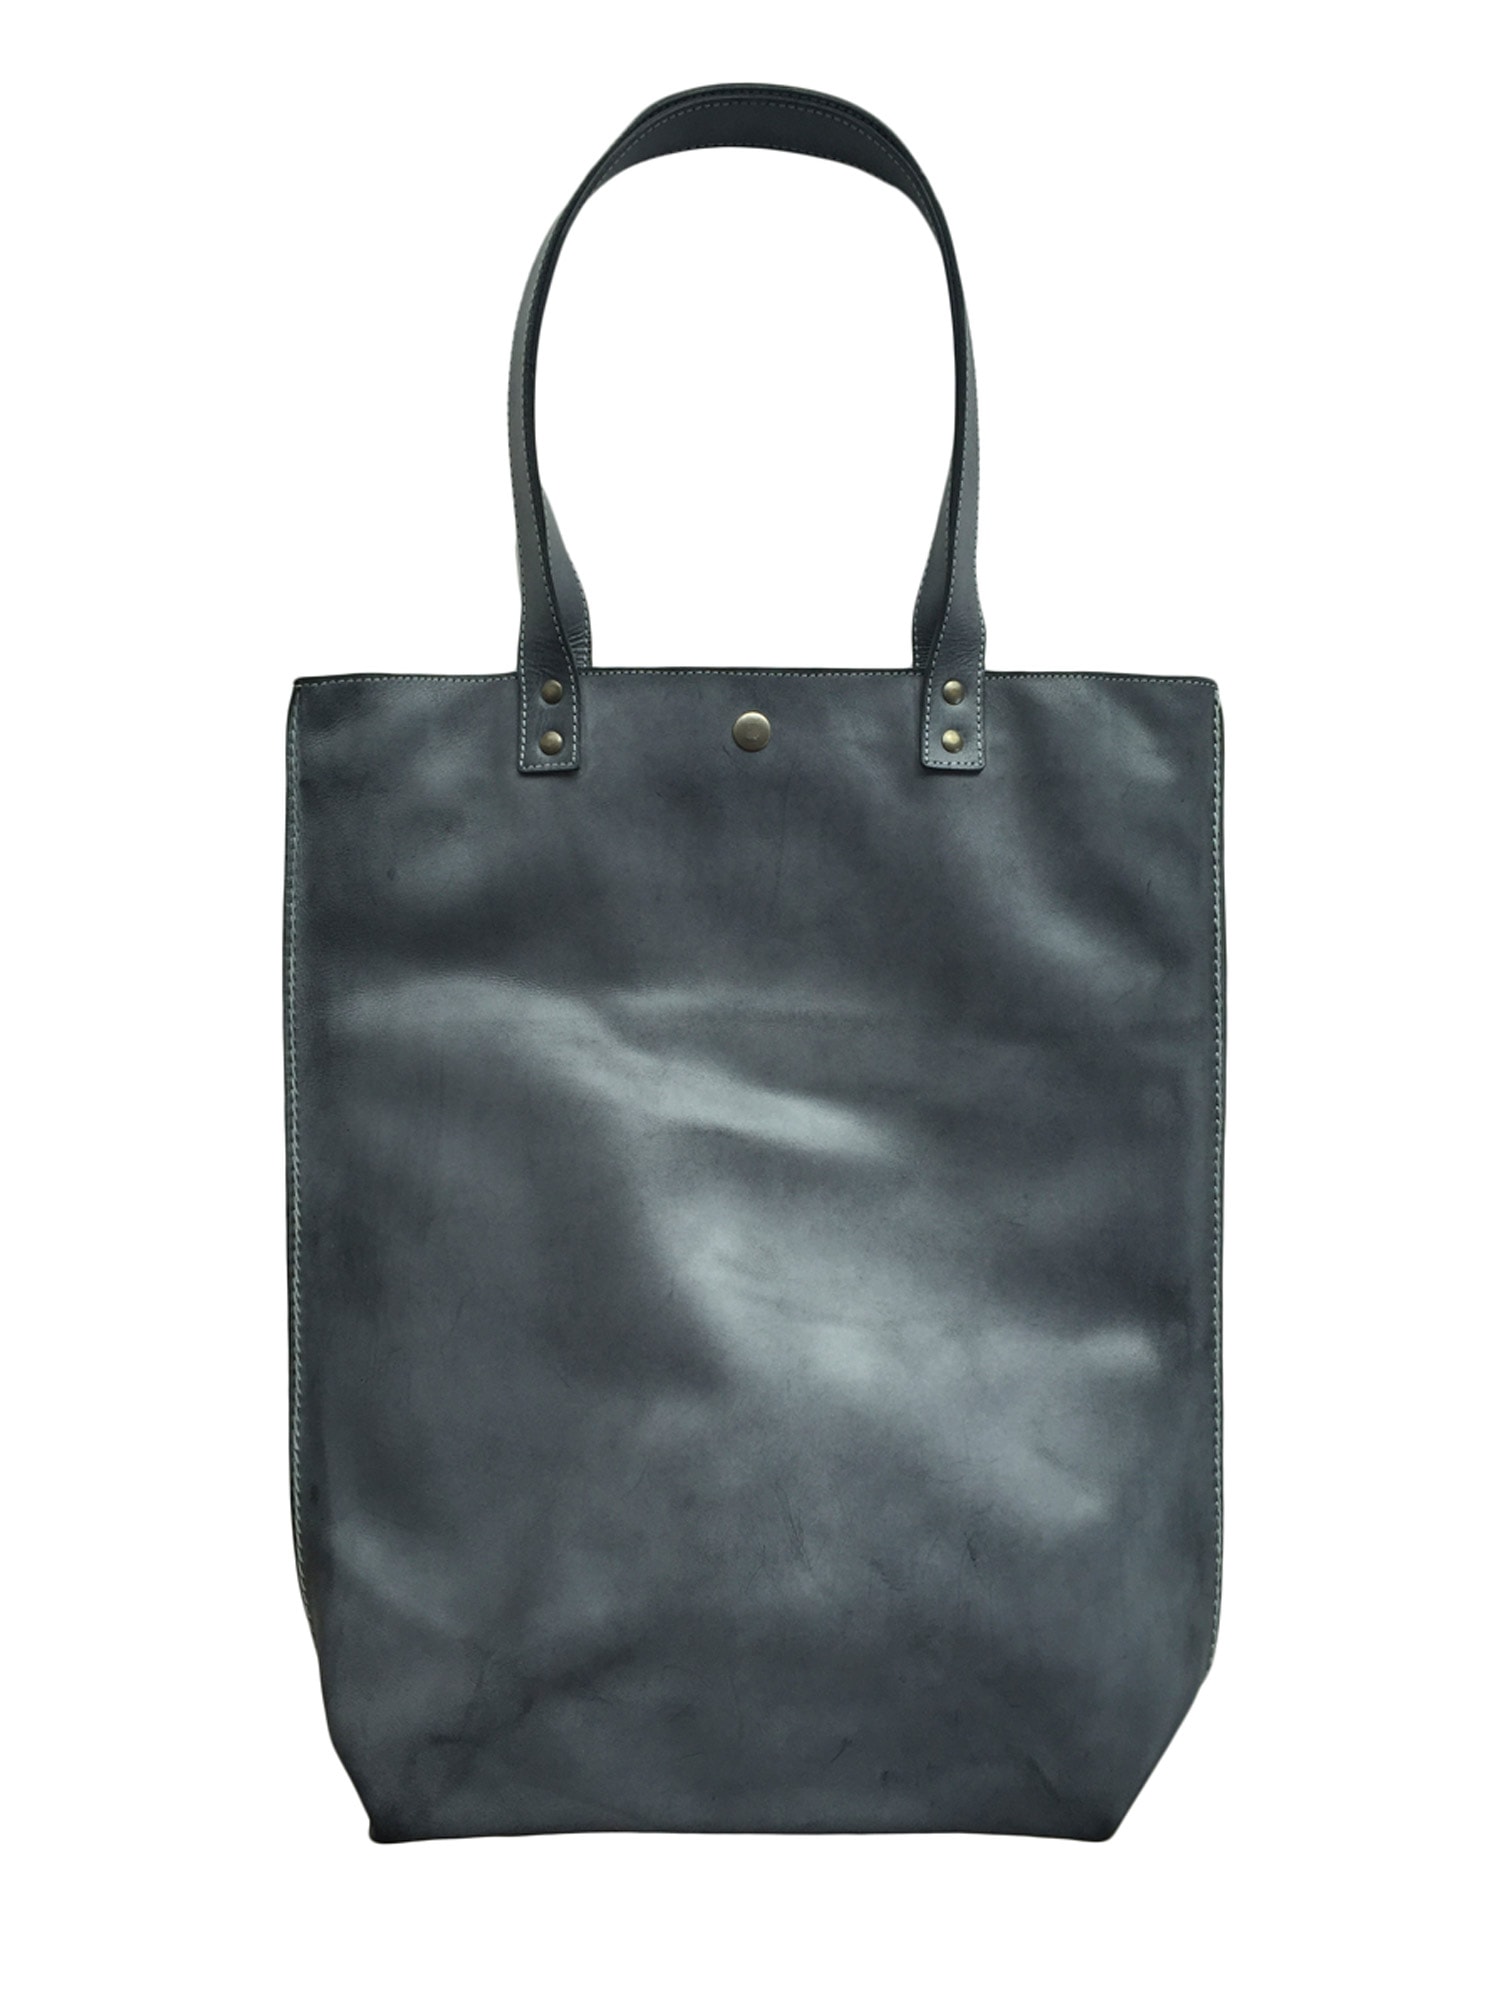 713_grey_JHOLA_leather-tote-bag_3_web